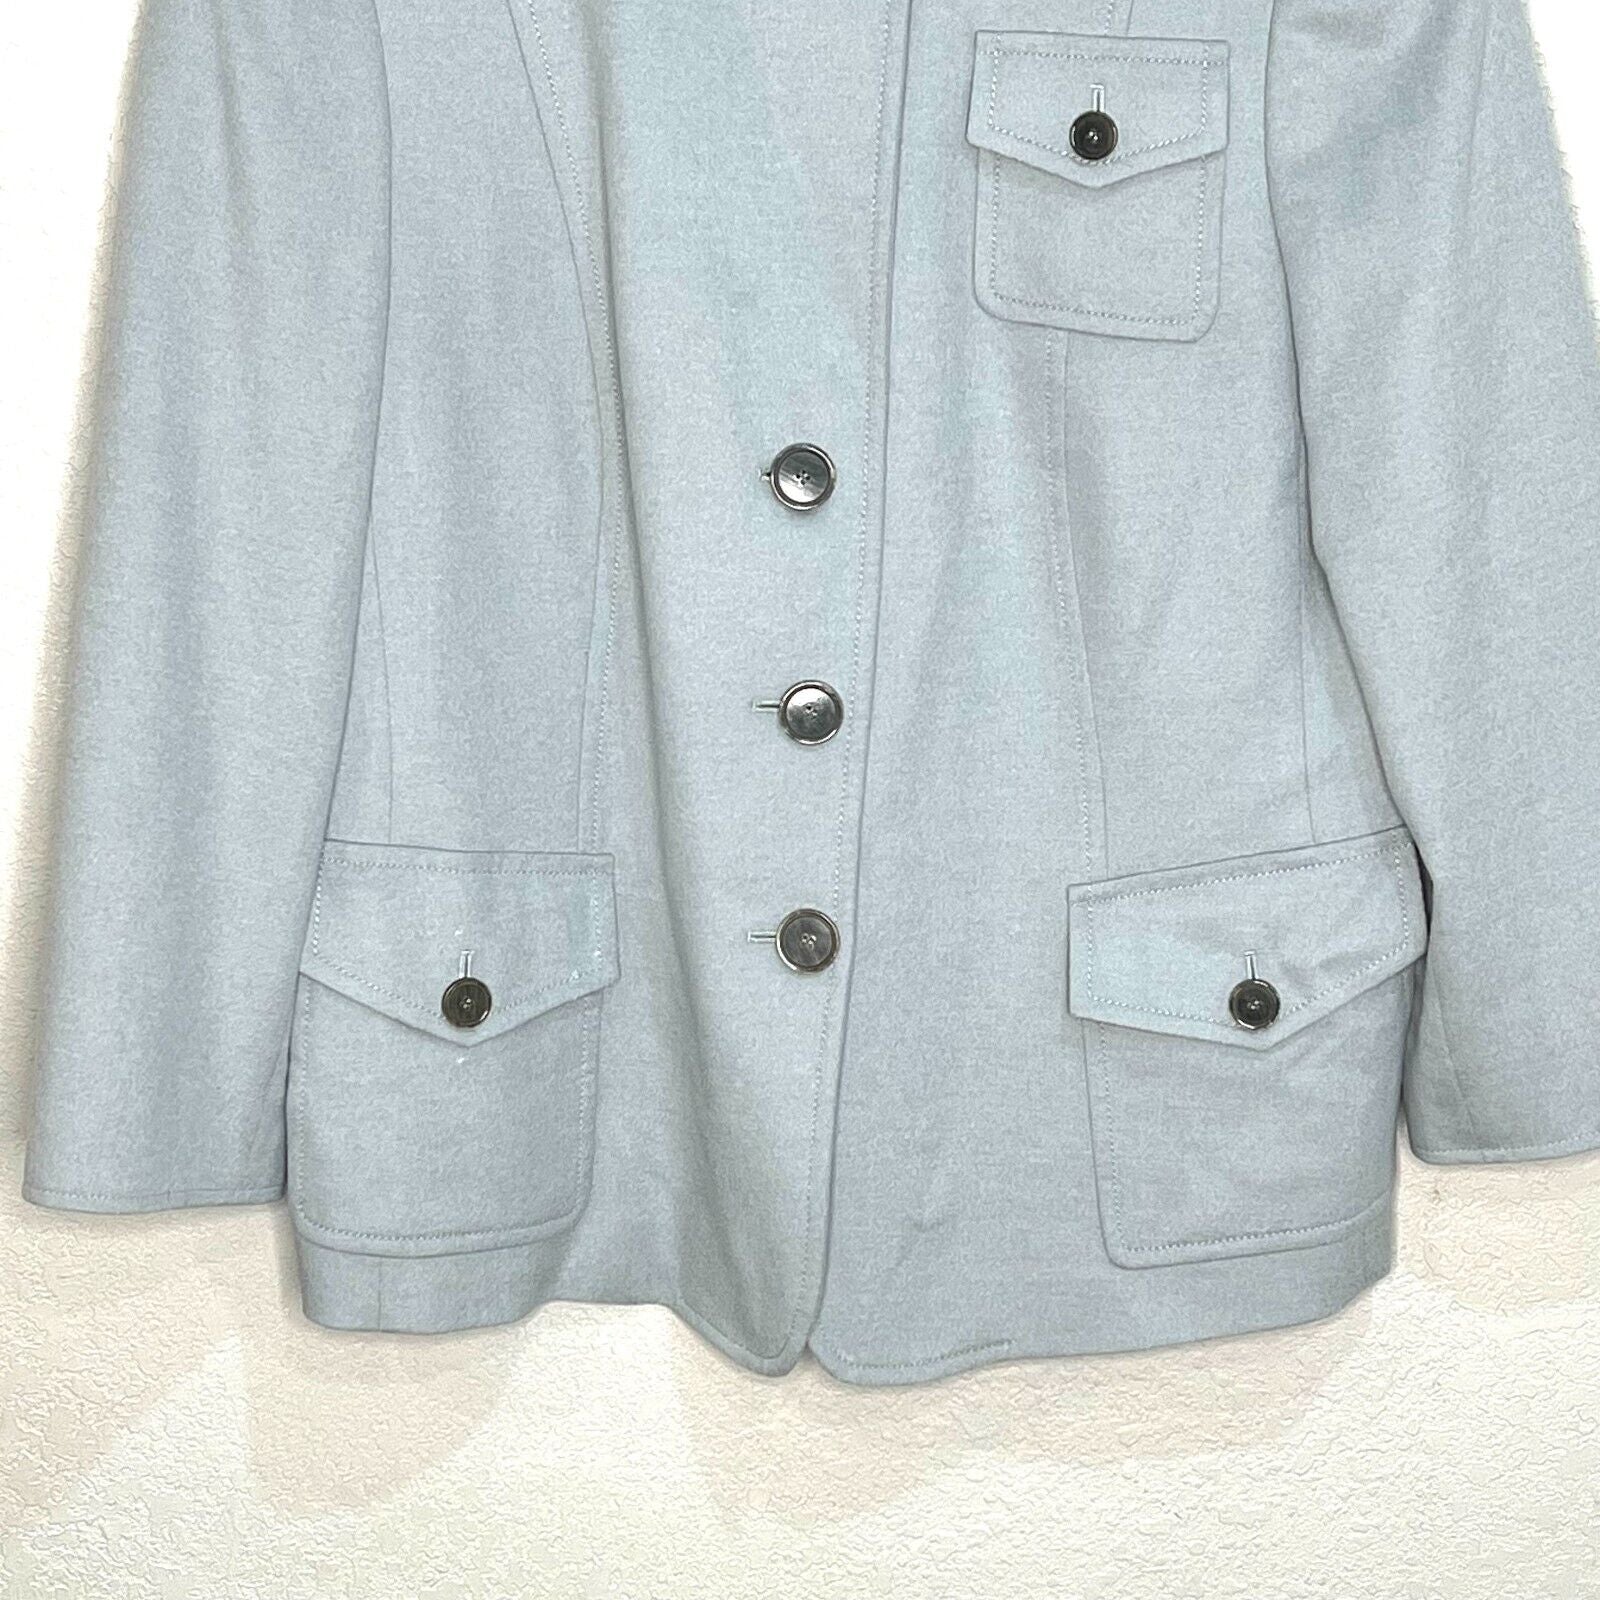 Akris Punto Light Blue Green Lined Jacket Blazer US Size 14